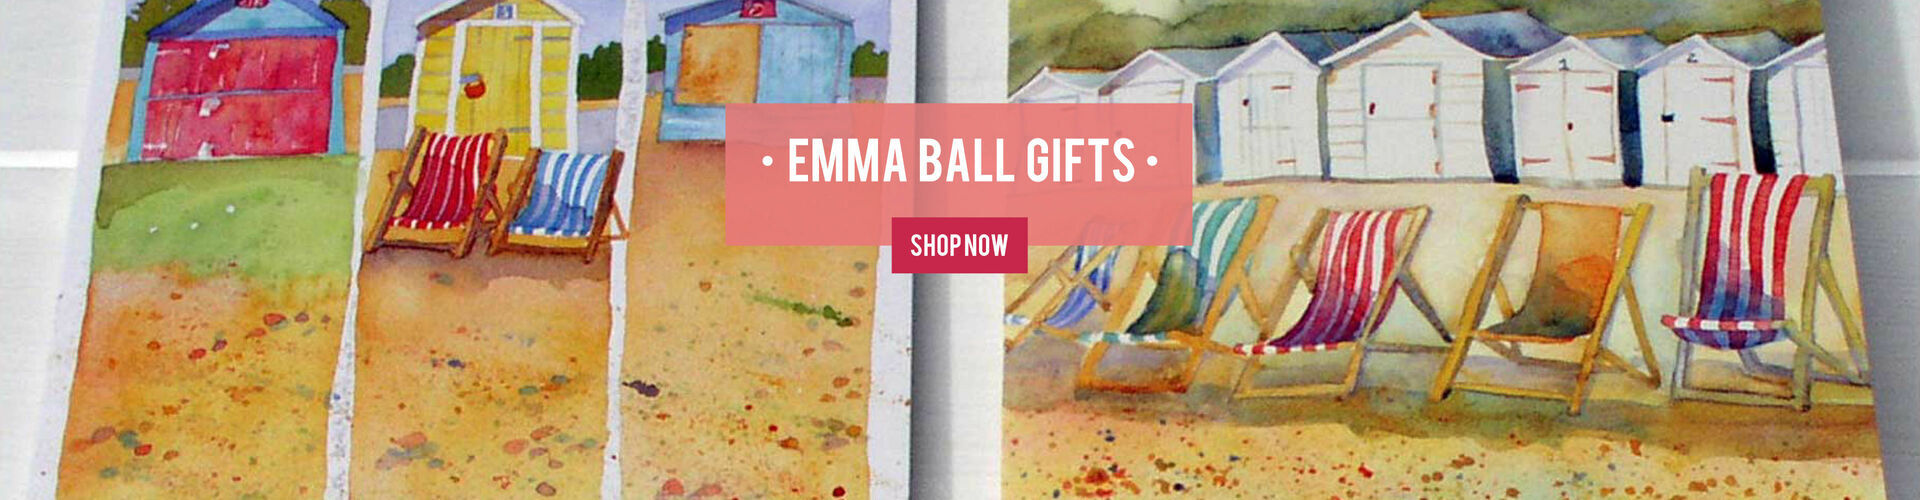 Emma Ball Gifts